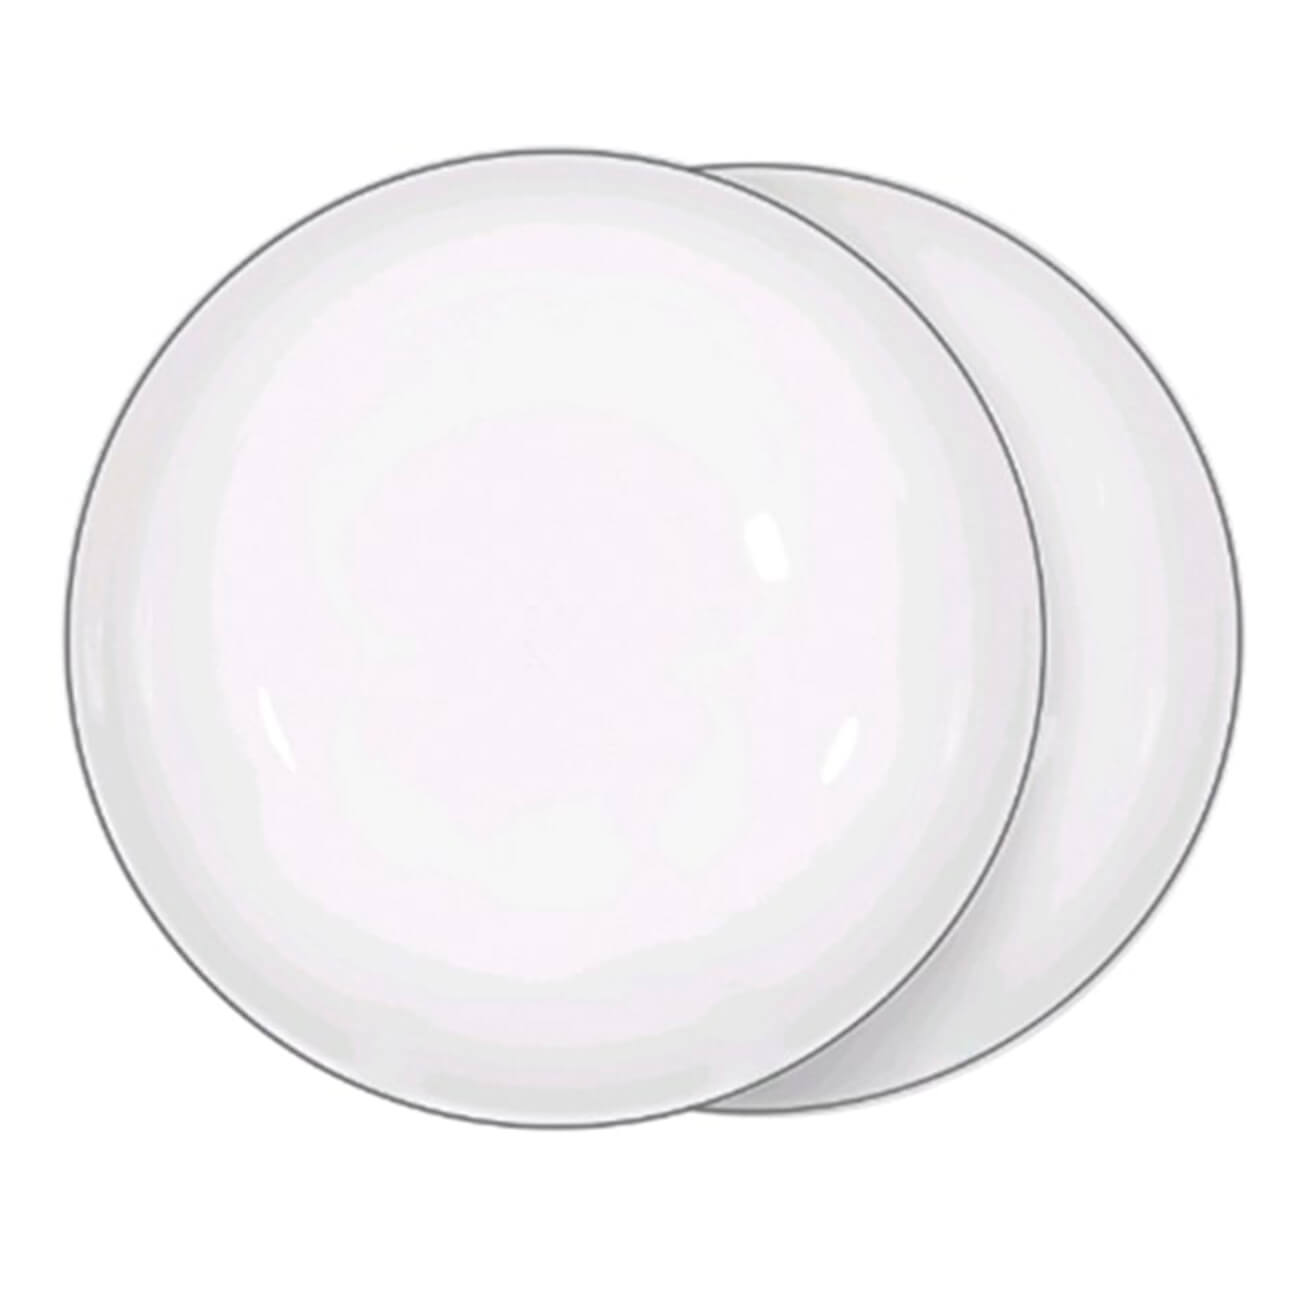 Тарелка суповая, 20х5 см, 2 шт, фарфор F, белая, Ideal silver тарелка скандинавская veles рассвет над имладрис 24 см